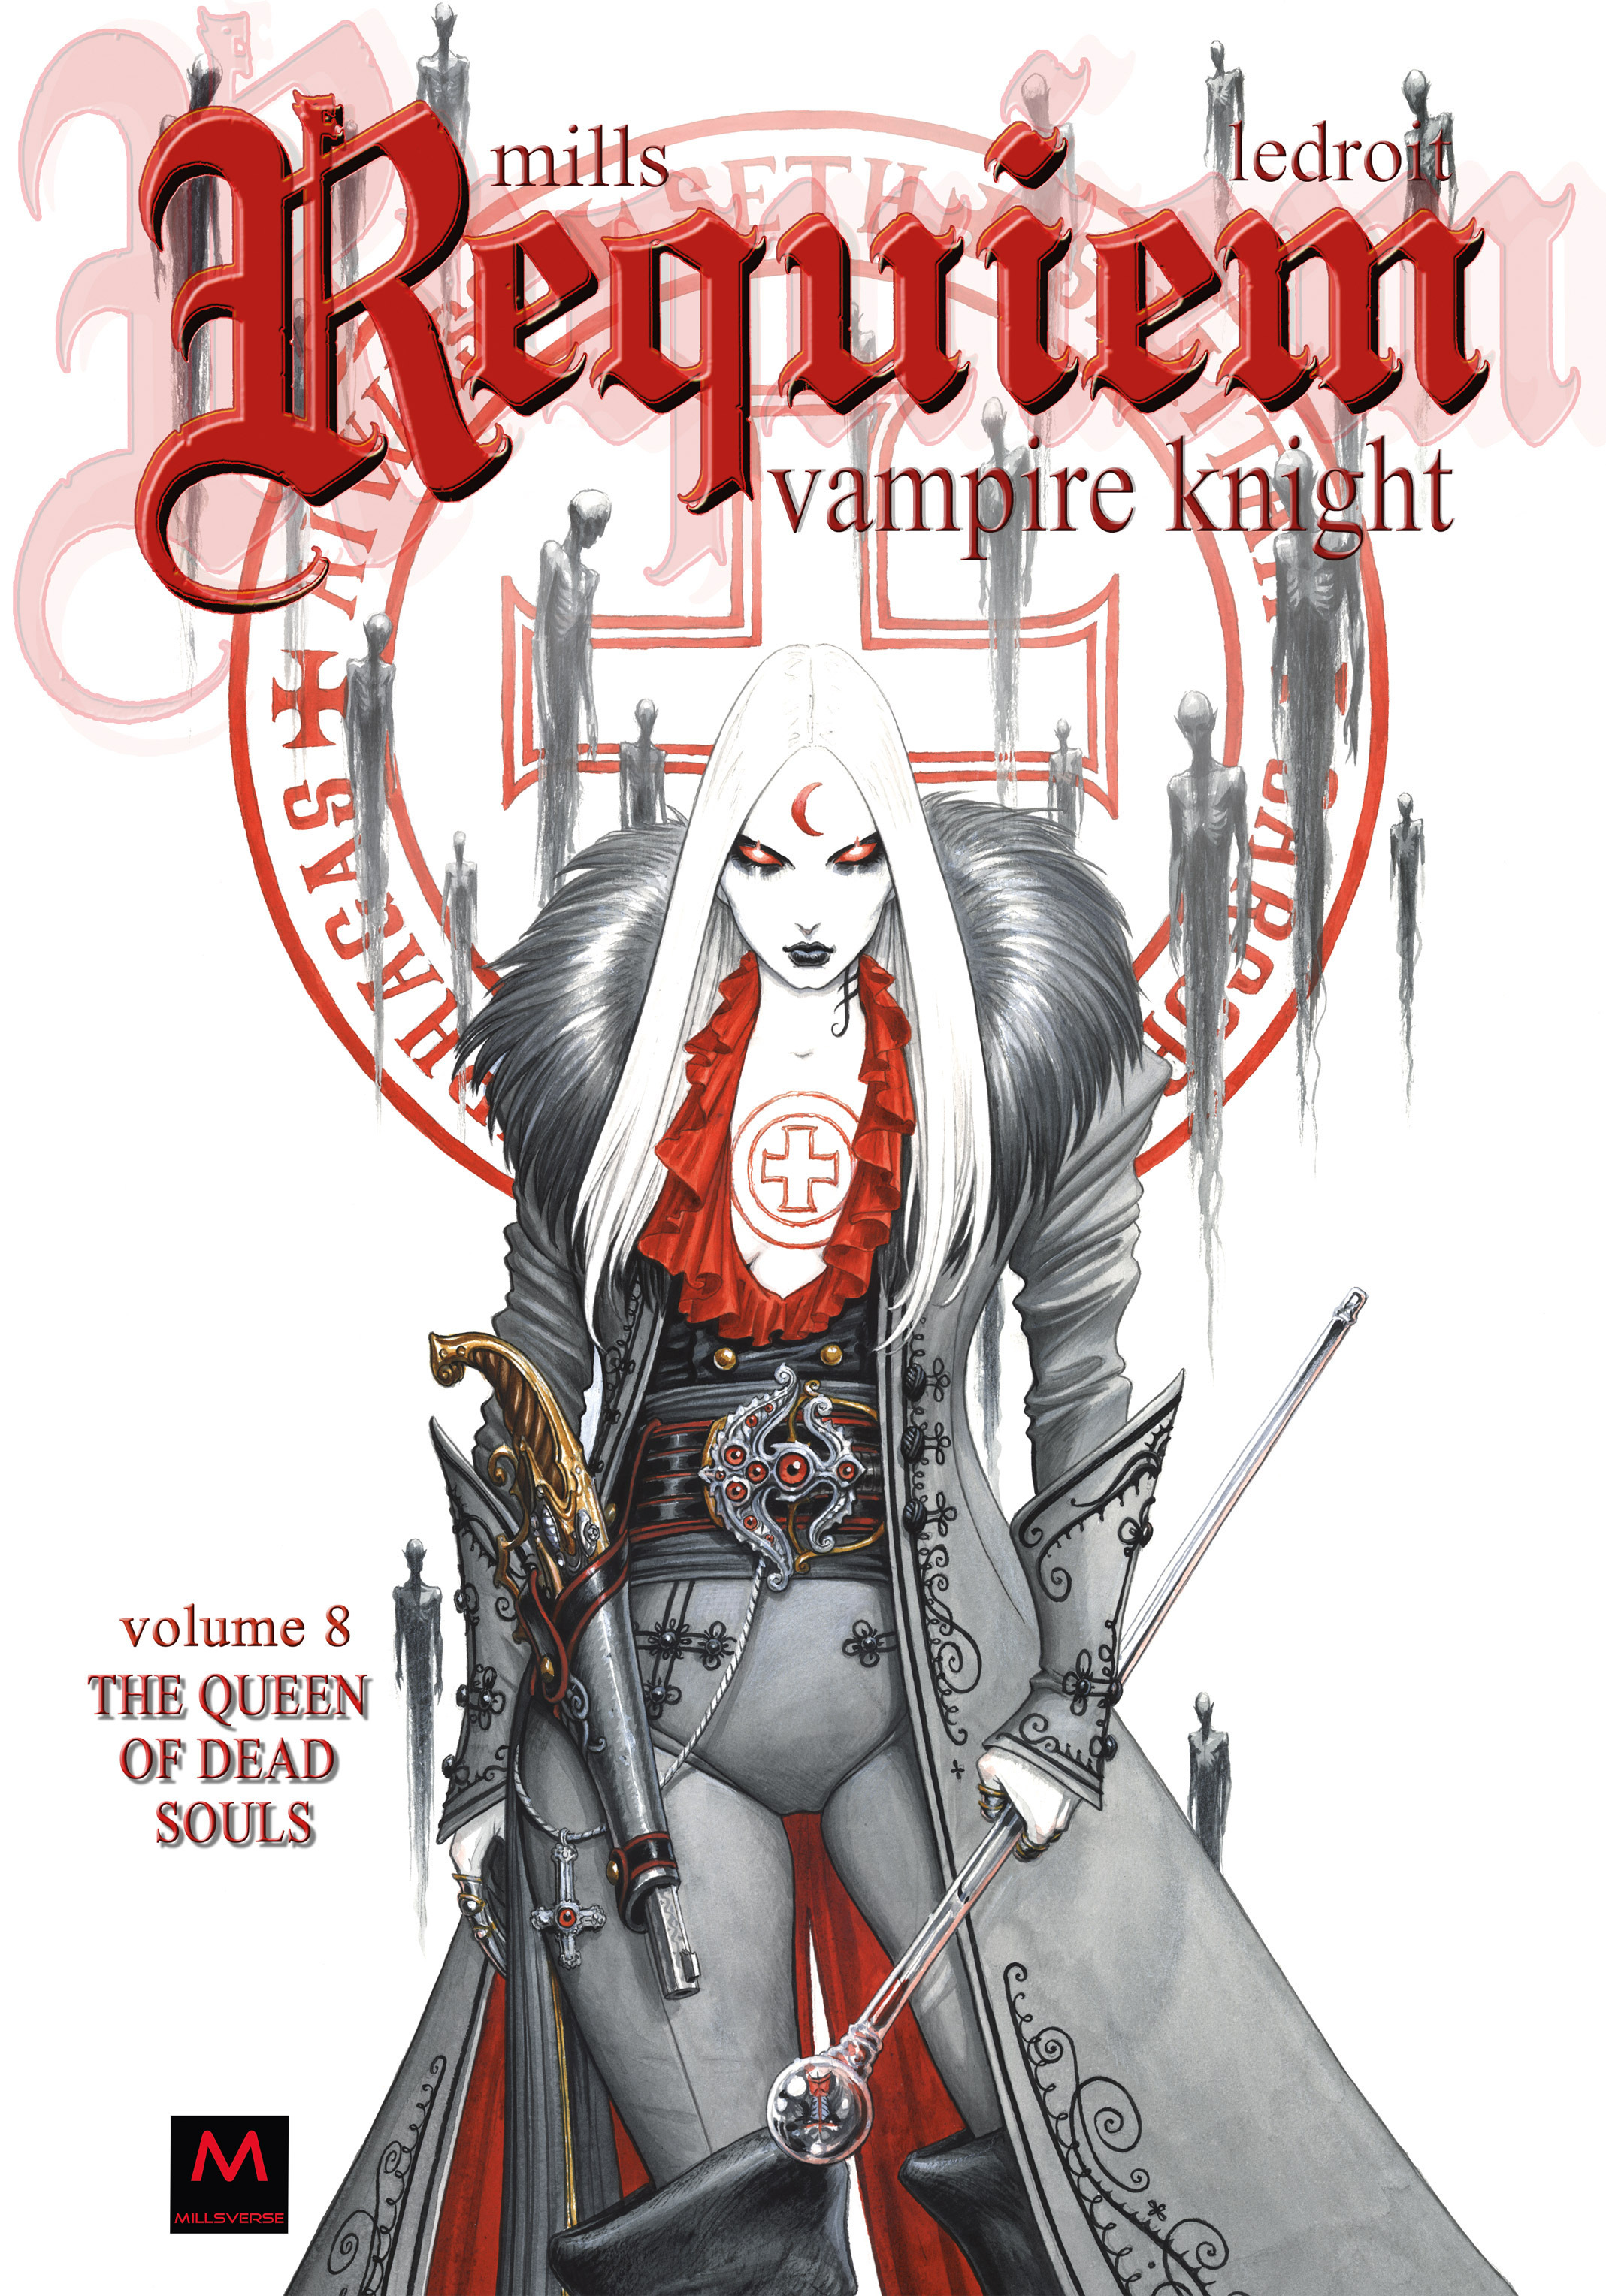 Requiem Vampire Knight Issue 8 | Read Requiem Vampire Knight Issue 8 comic  online in high quality. Read Full Comic online for free - Read comics  online in high quality .| READ COMIC ONLINE